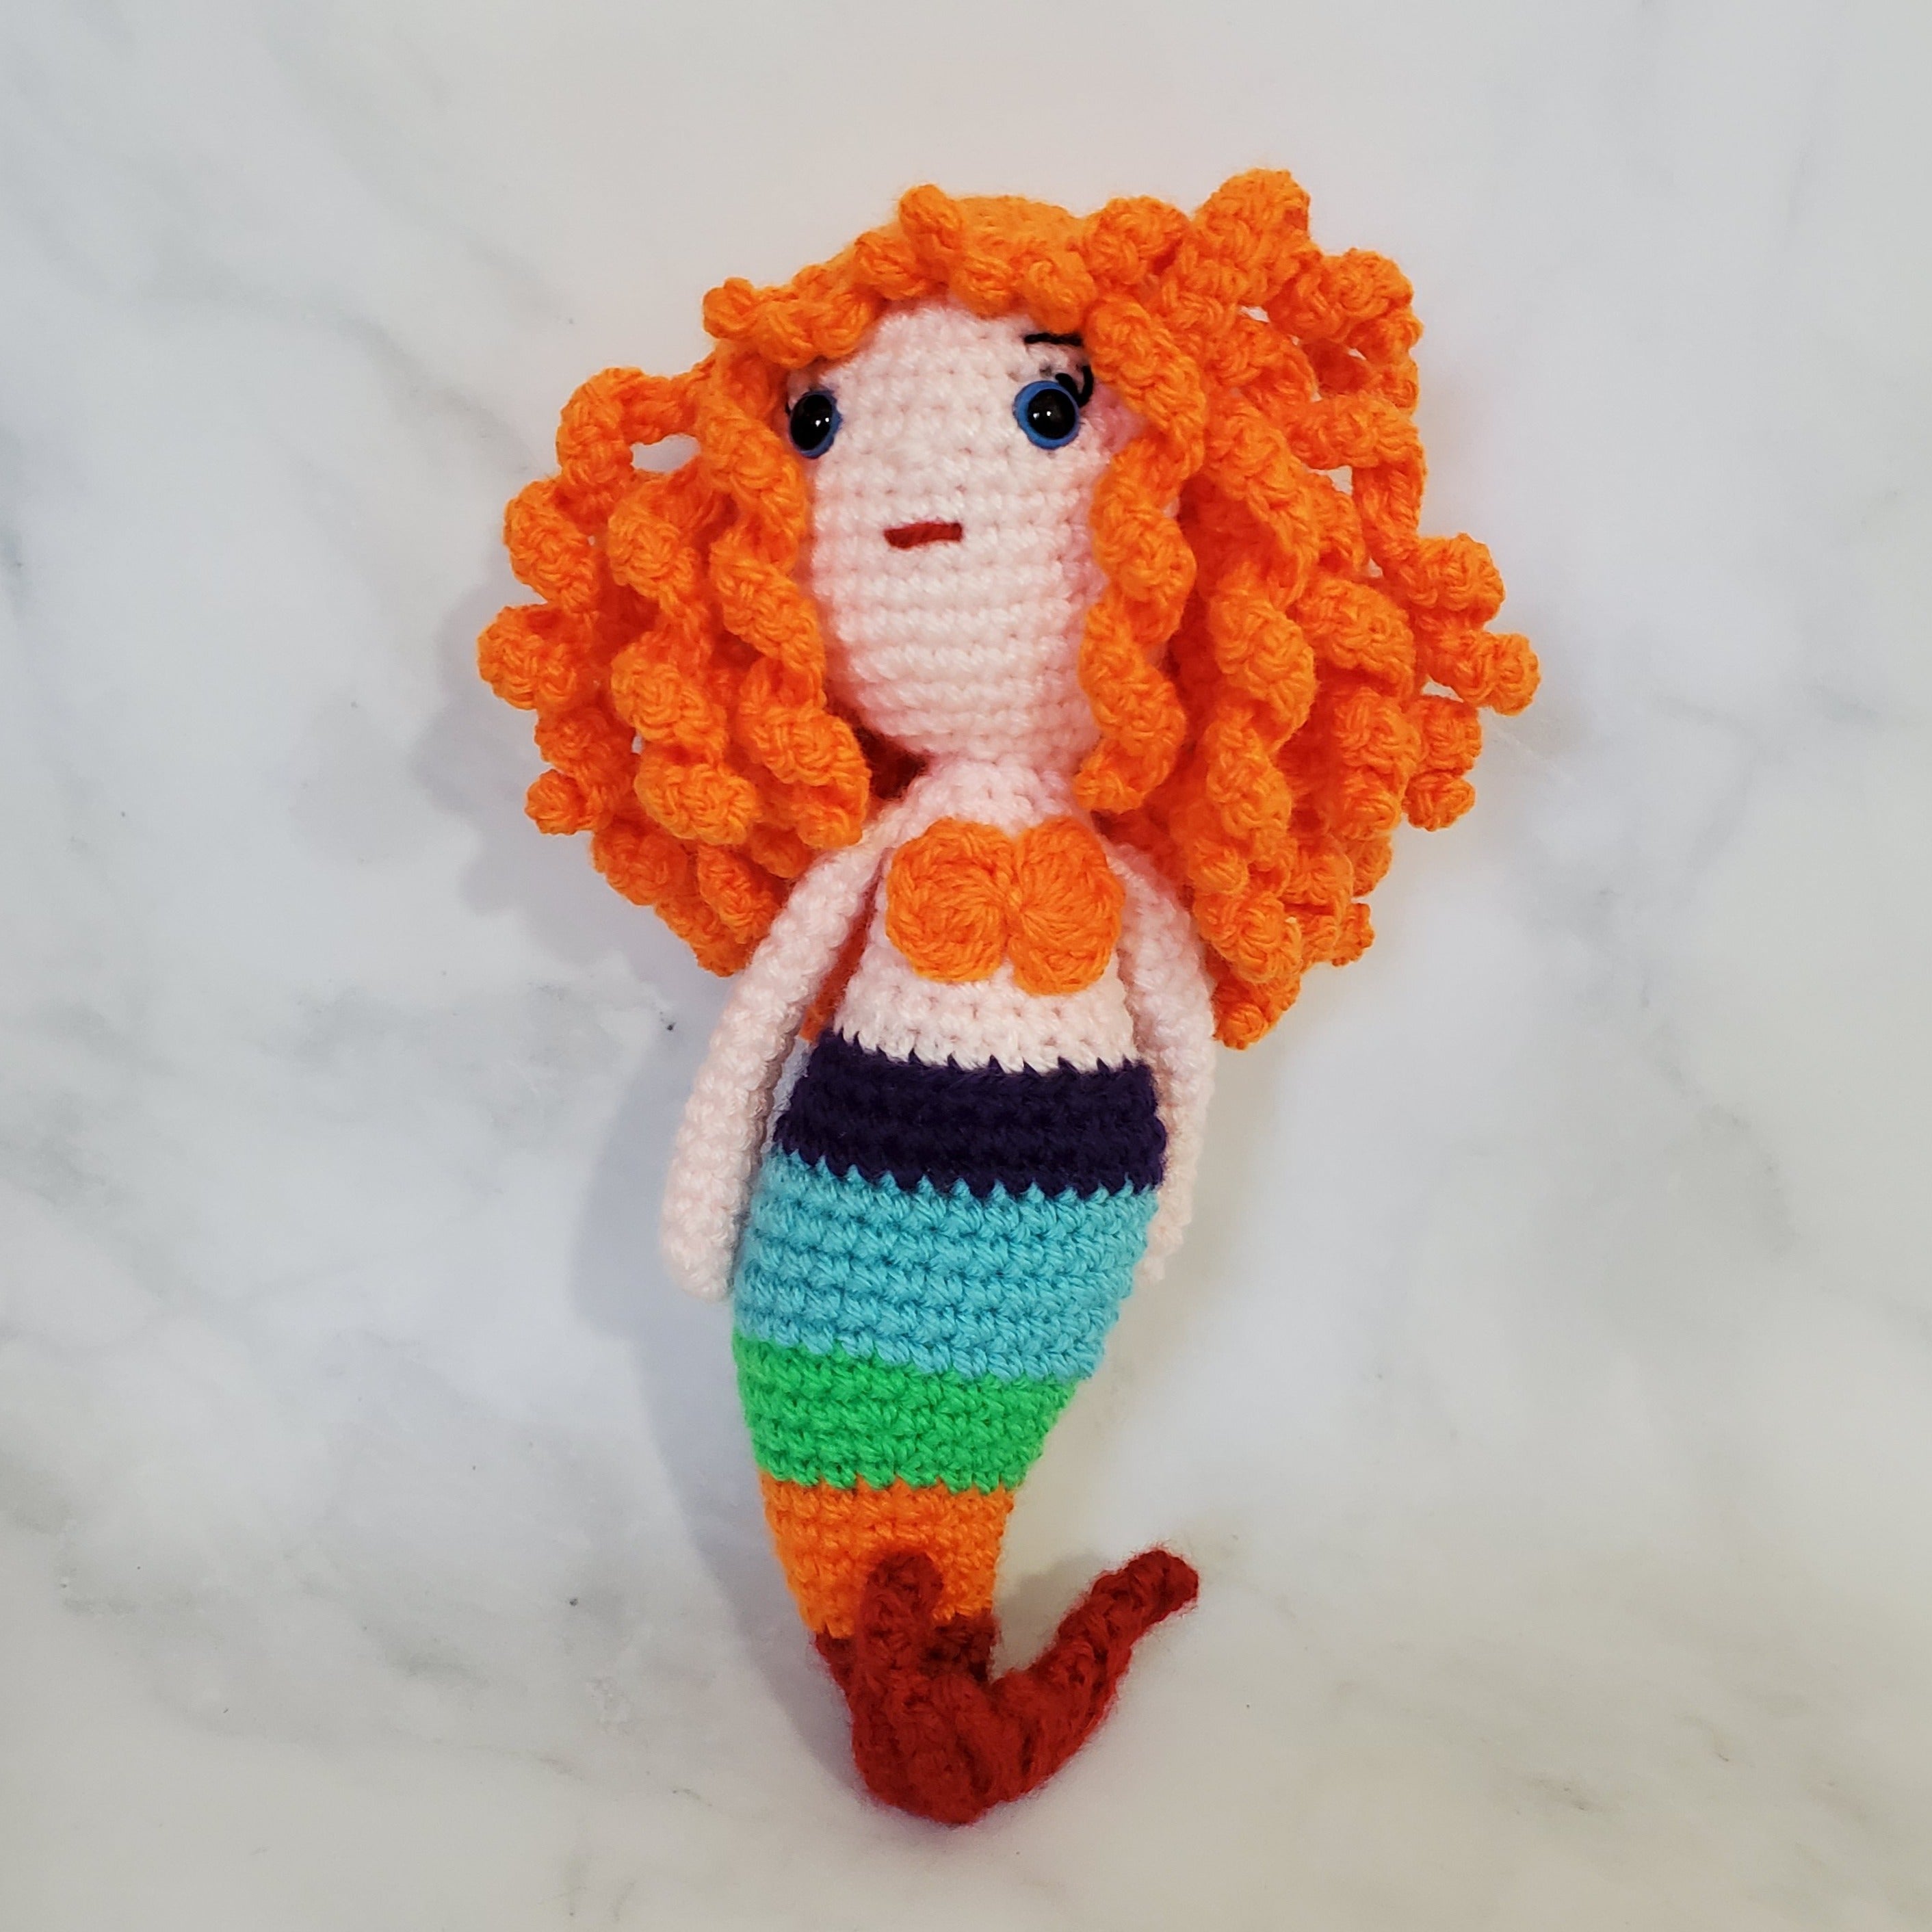 Mermaid Plush Toy with Orange Hair - 9 Inch